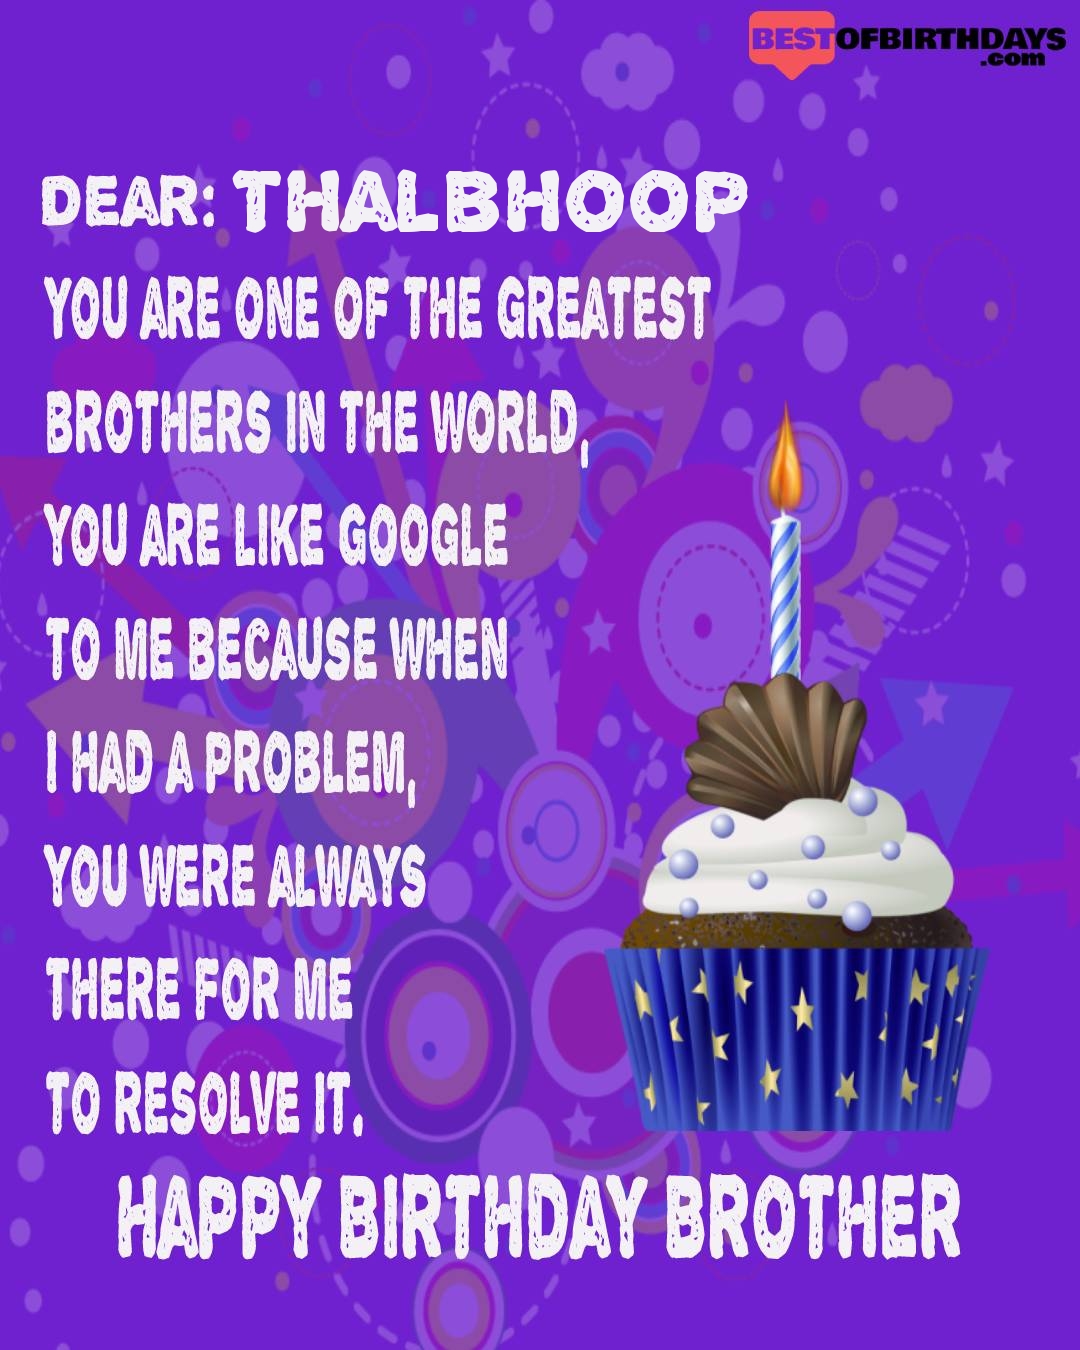 Happy birthday thalbhoop bhai brother bro